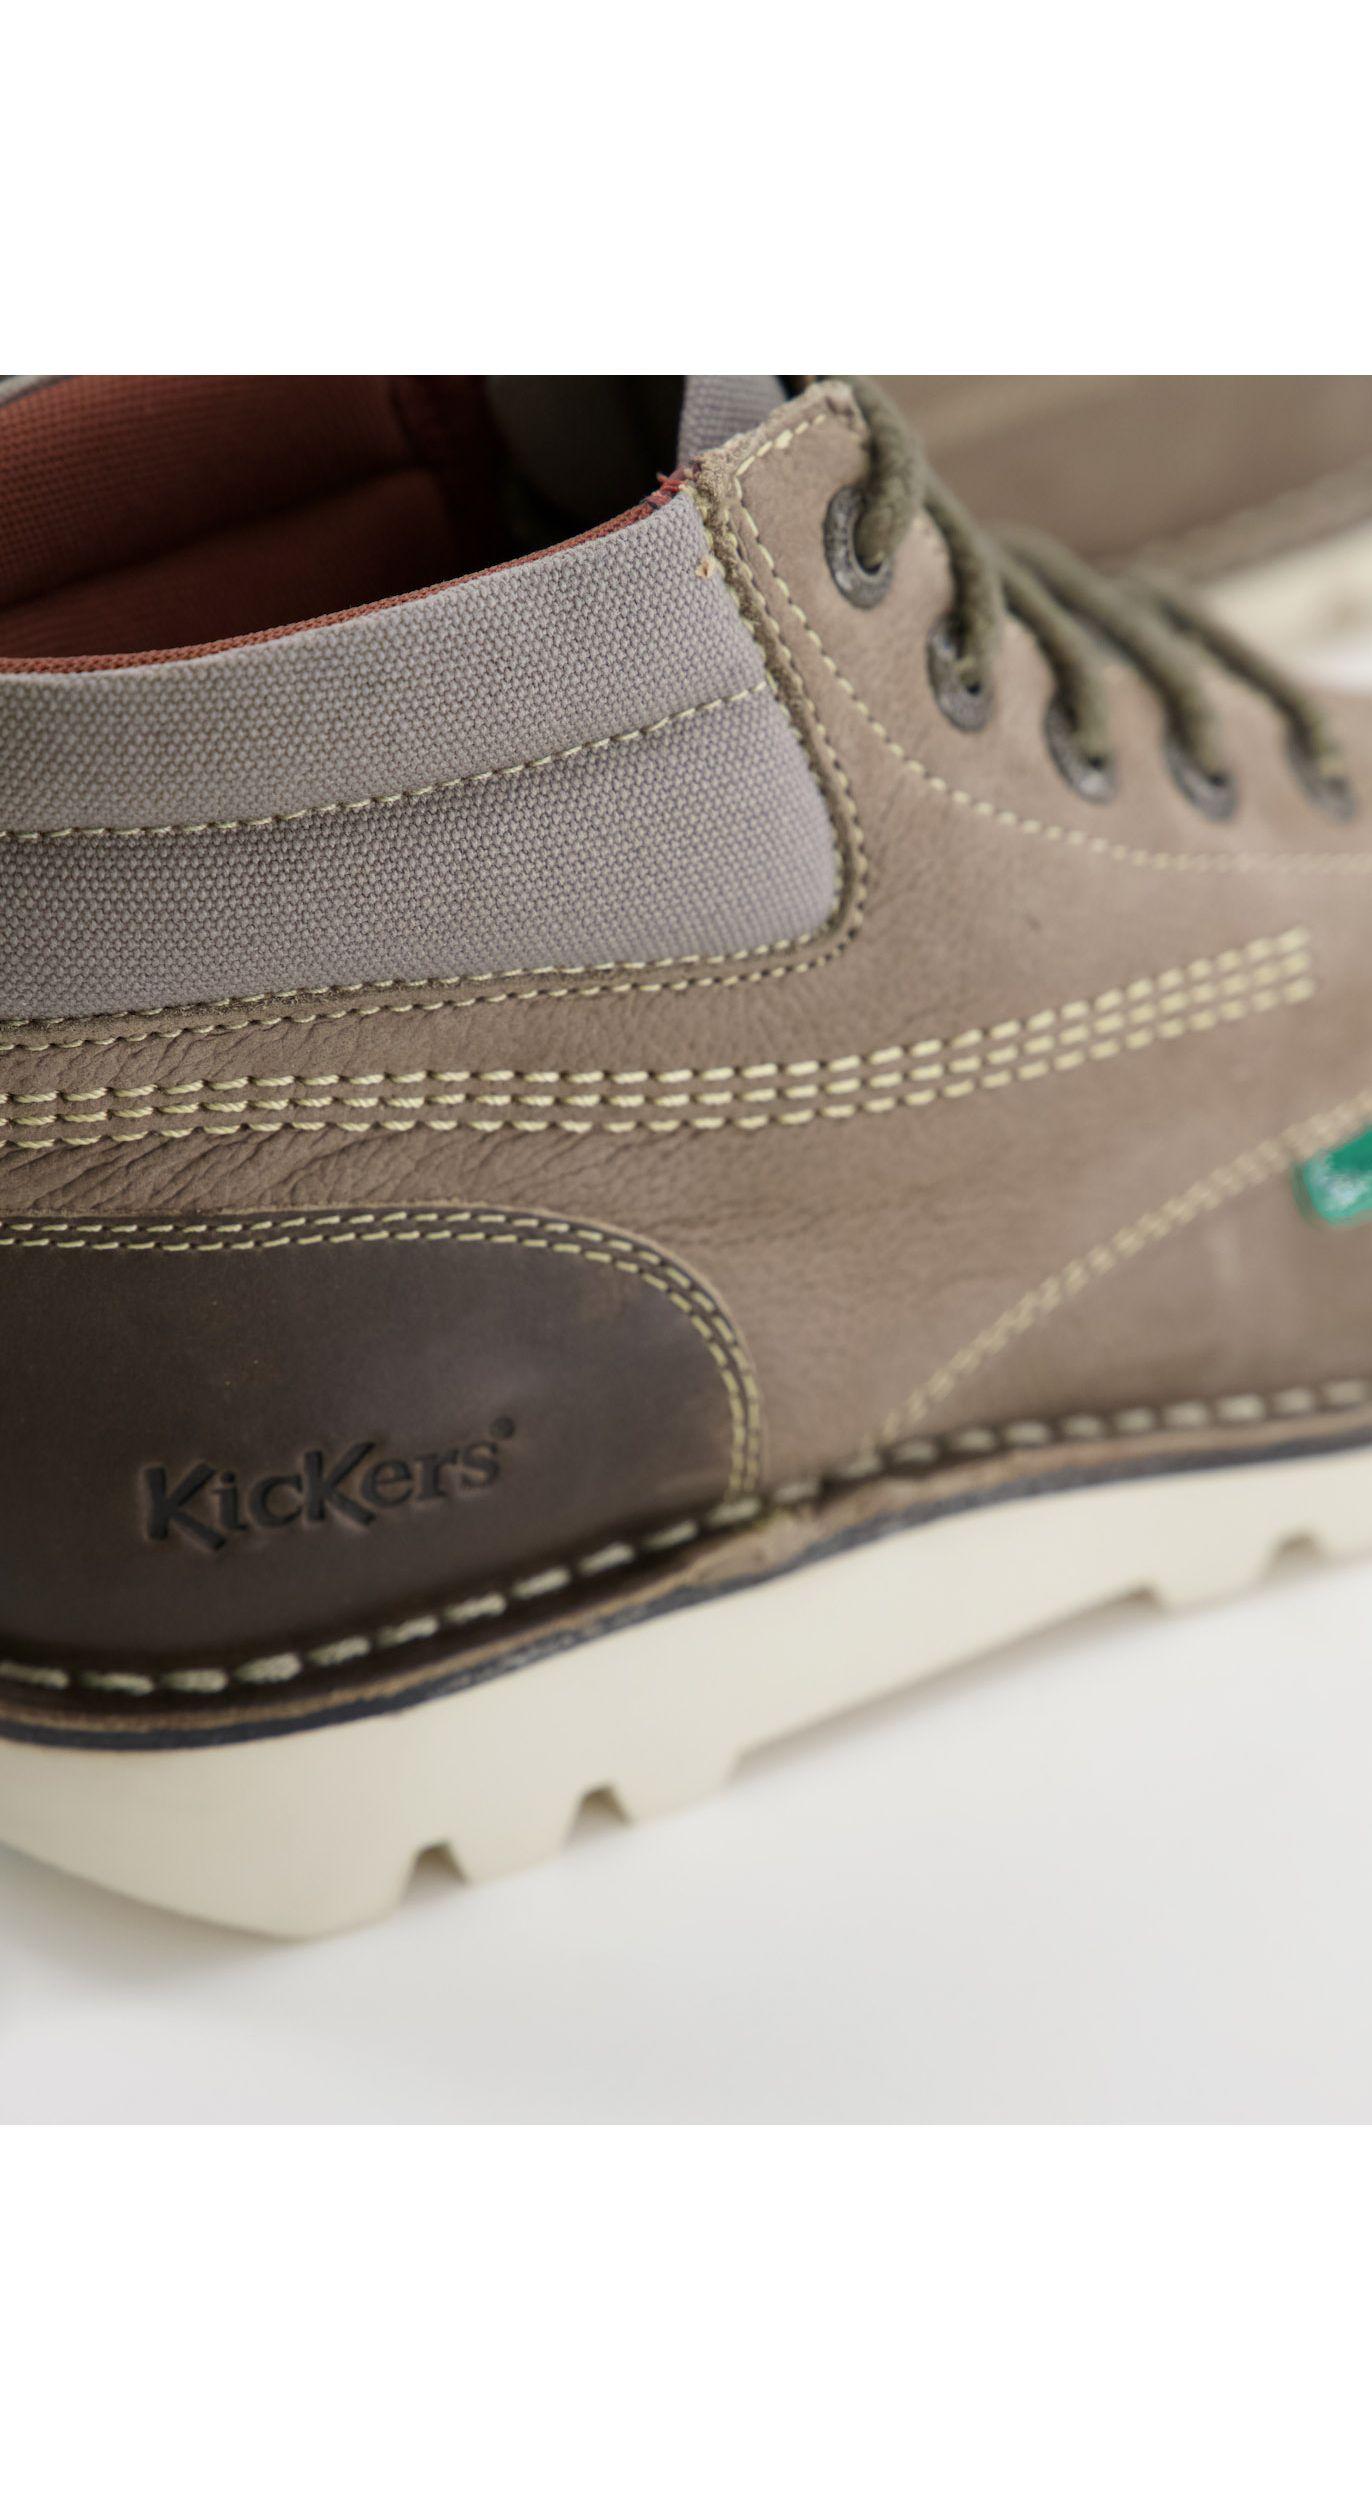 Kickers mens kickers kick hi mash shoes size uk 6.5 eur 40 tan leather footwear New Box 